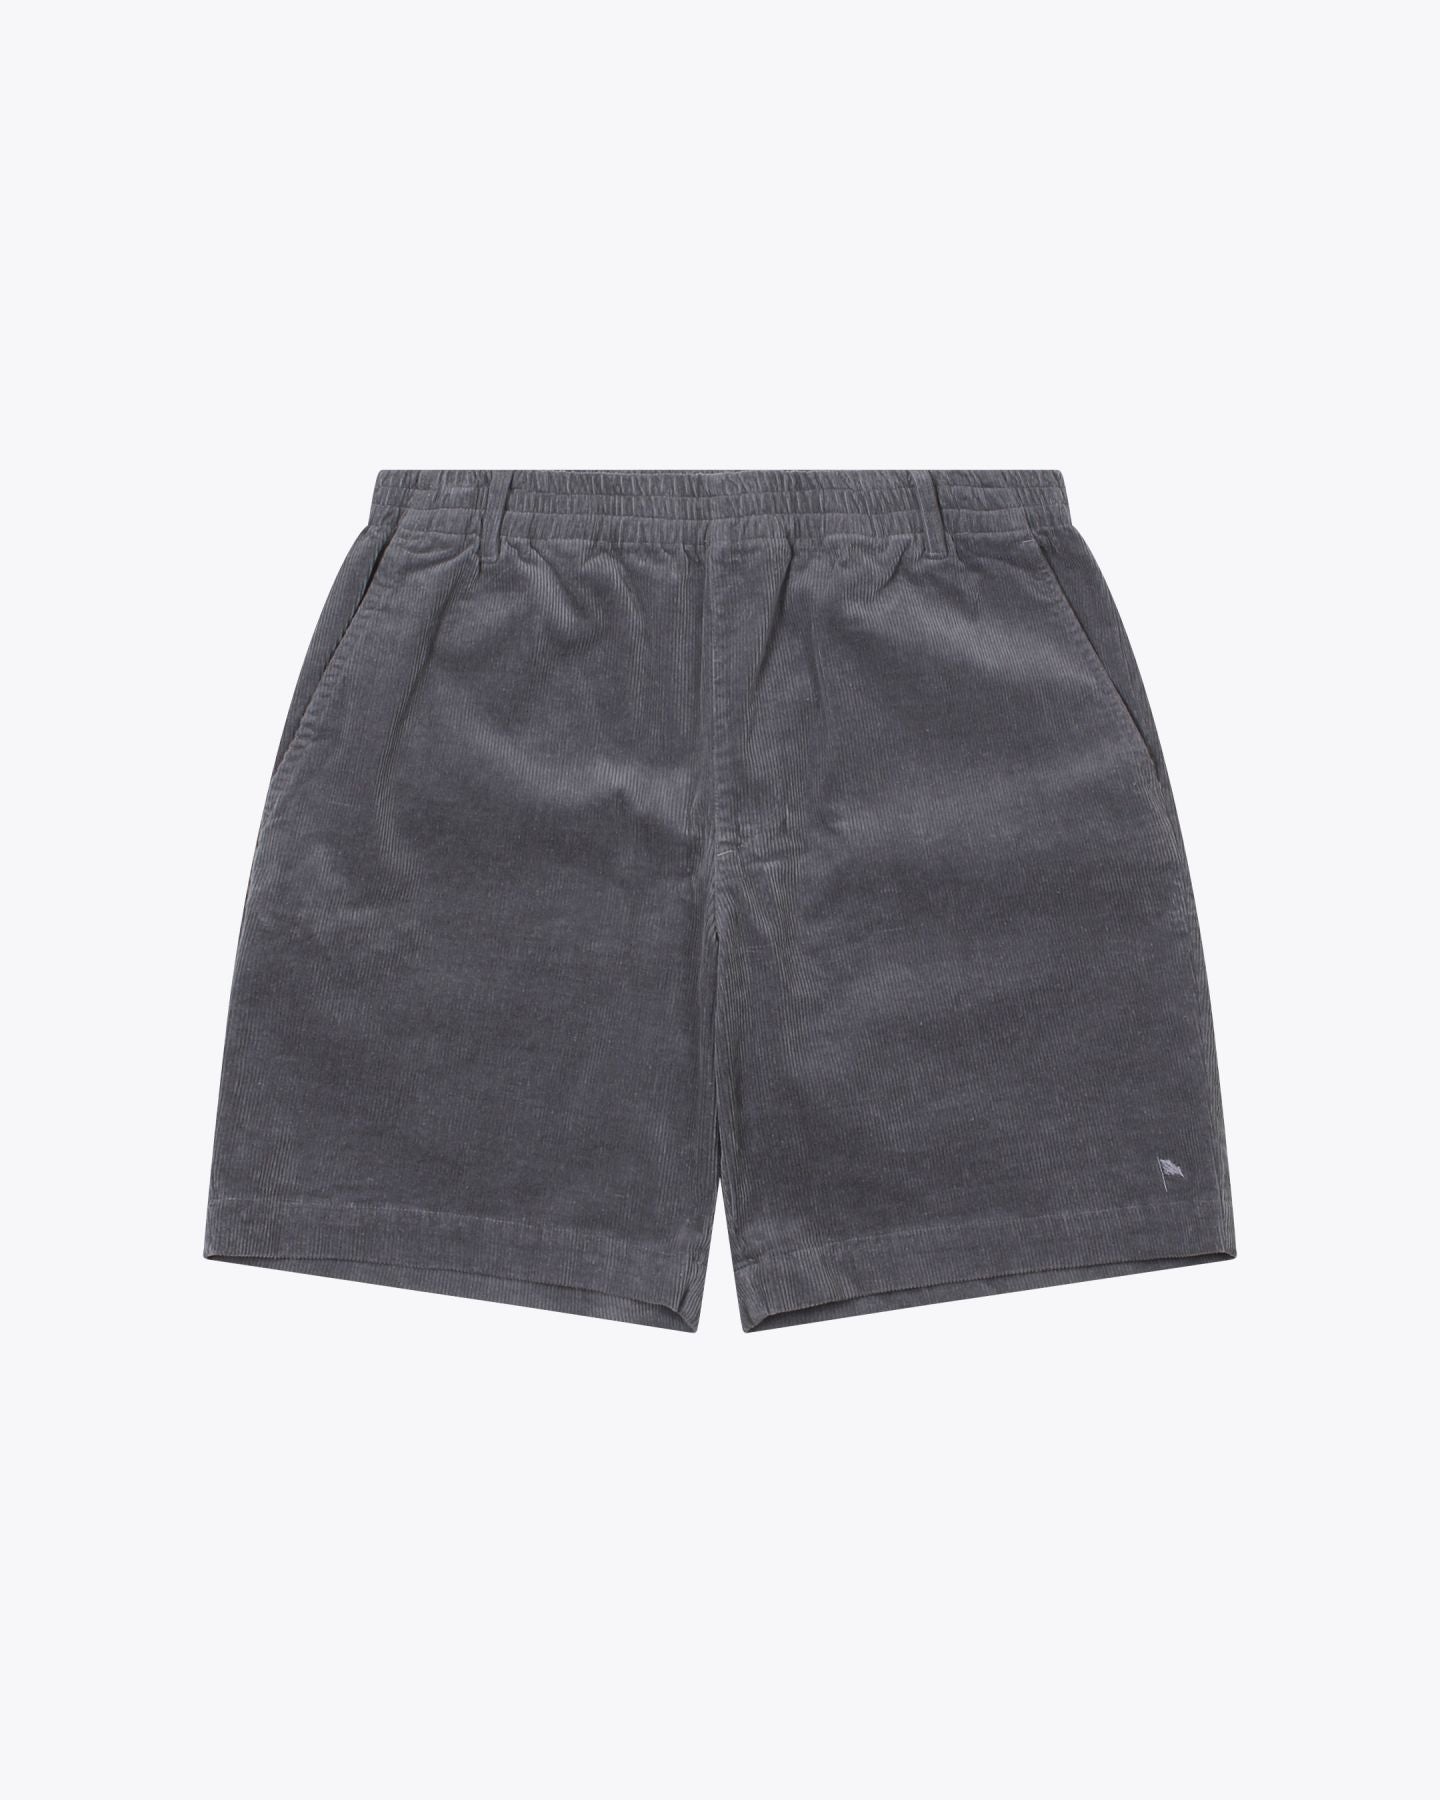 Wemoto Shire Cord Shorts